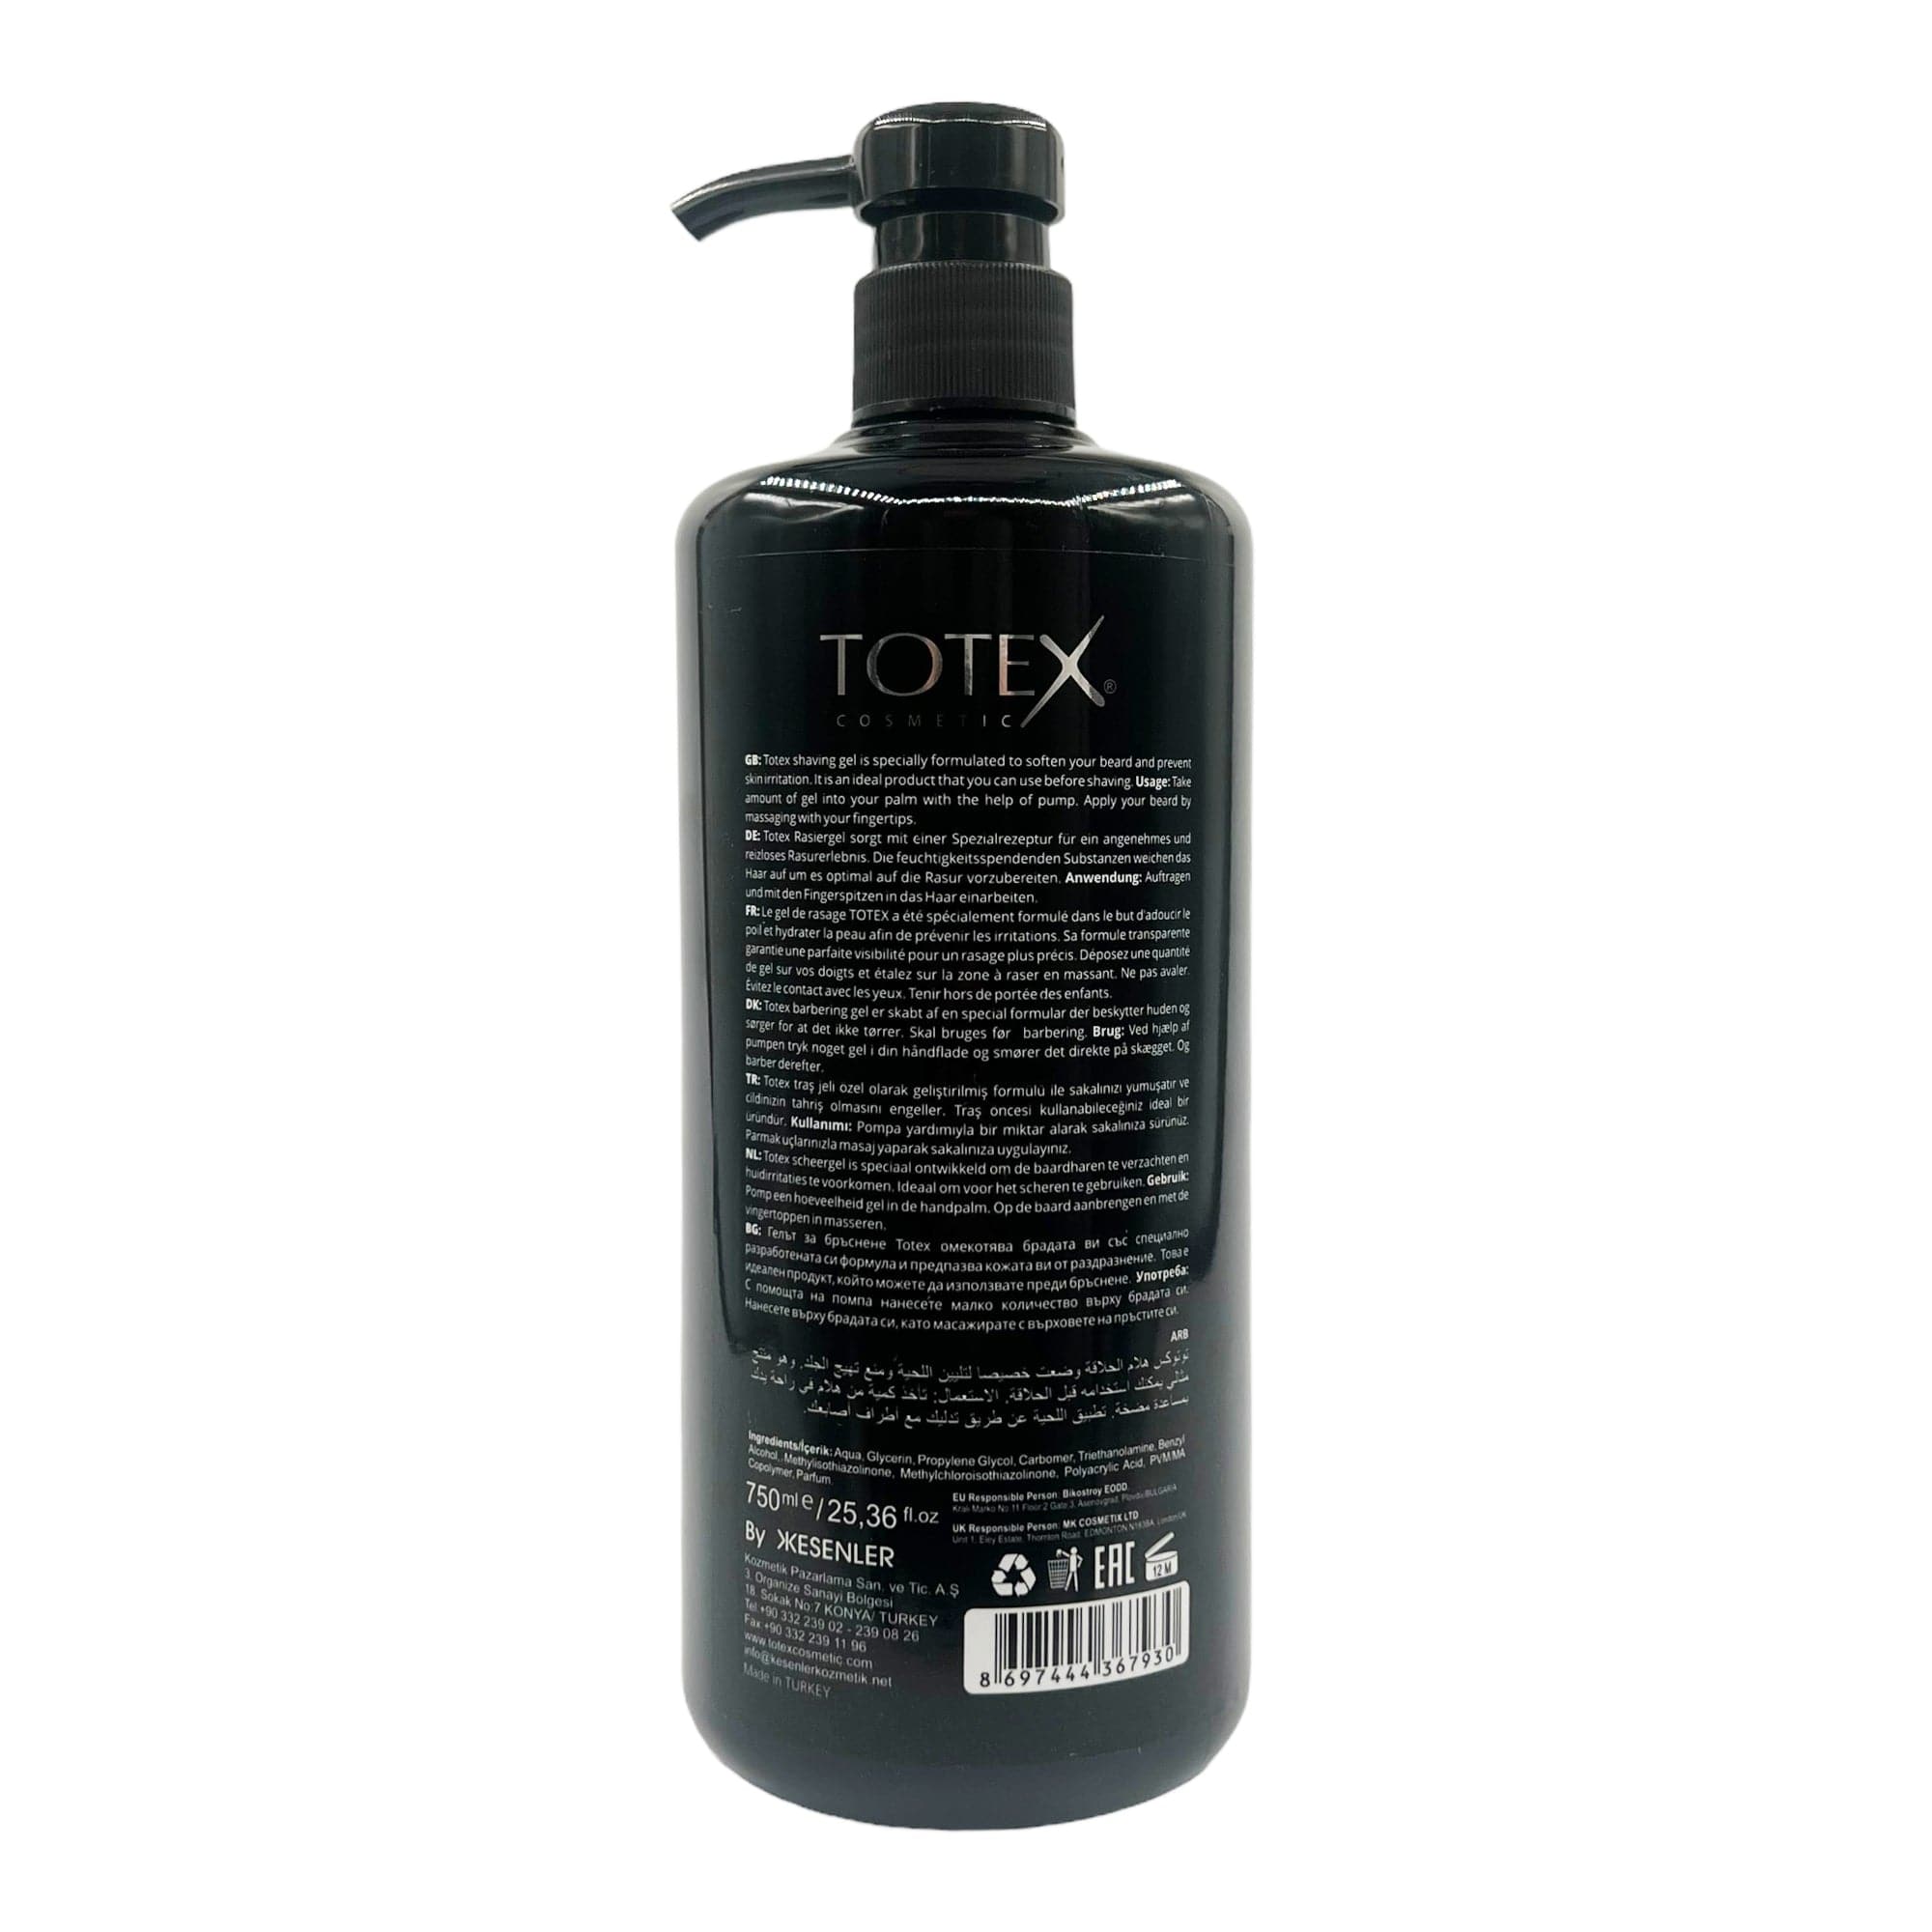 Totex - Shaving Gel Sensitive 750ml